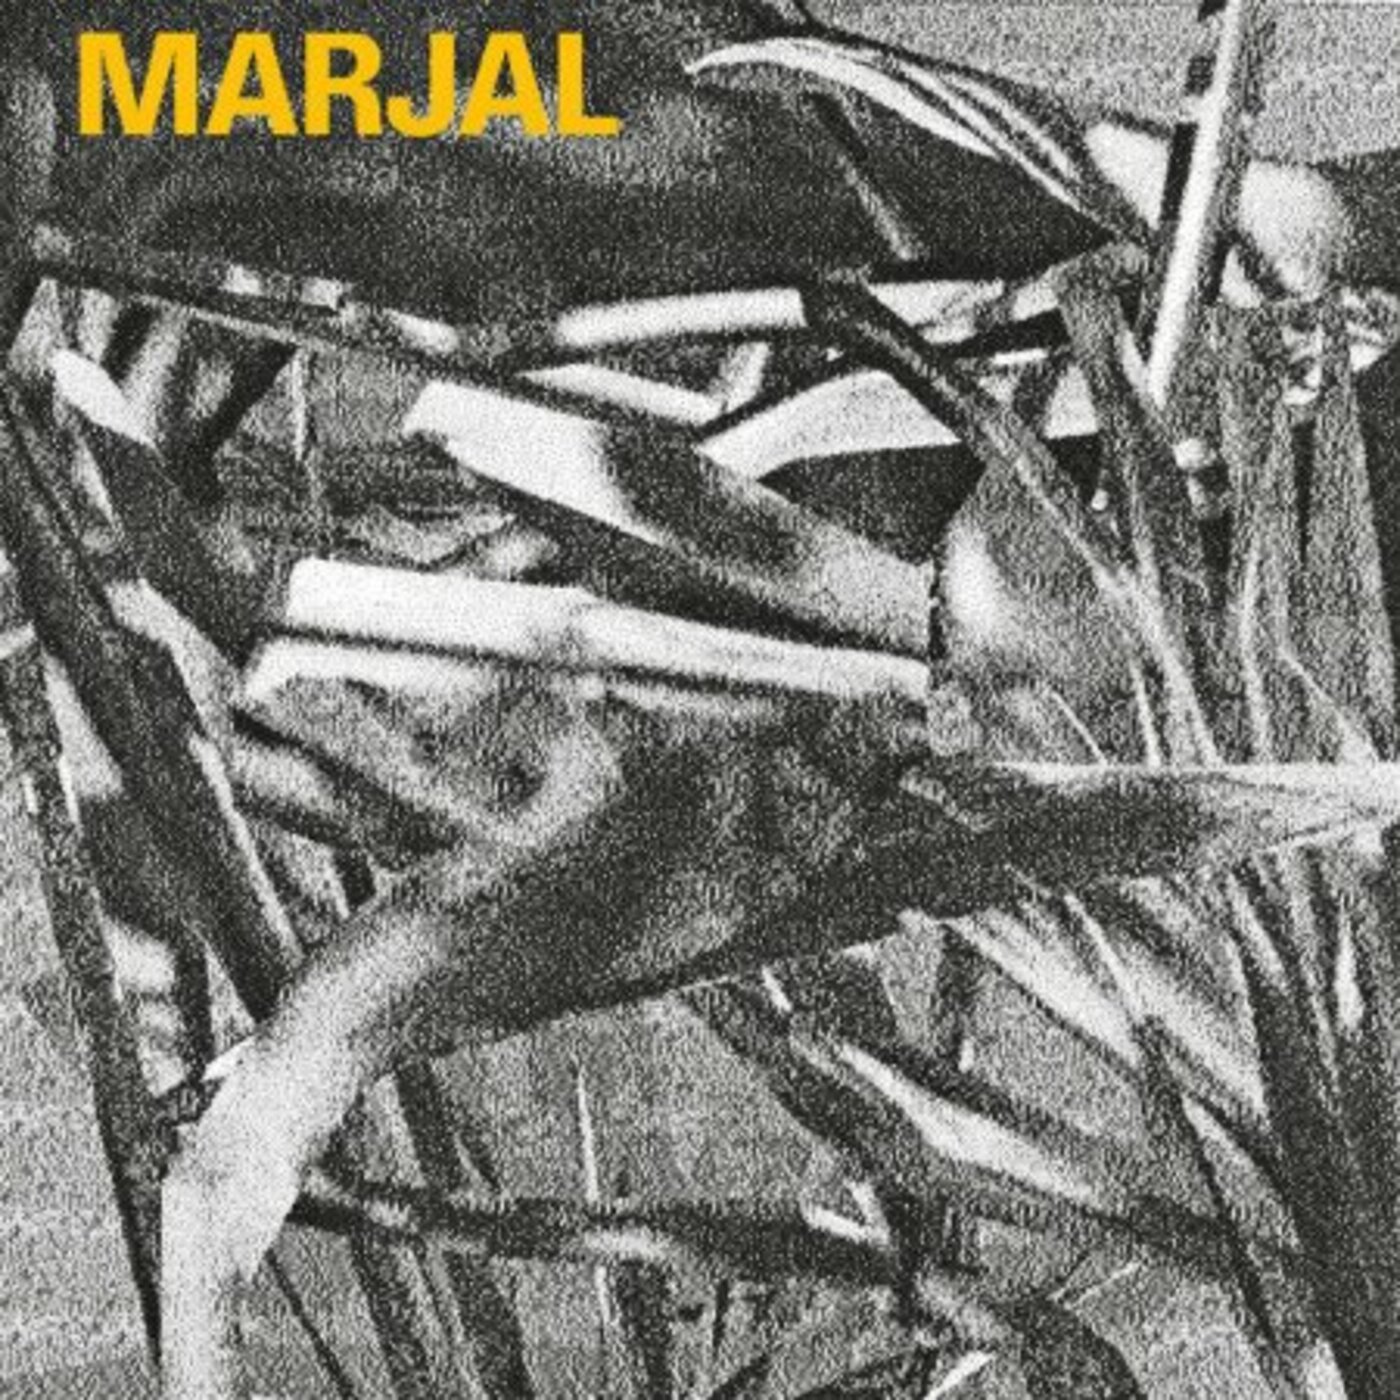 Marjal - Marjal | musica en valencià